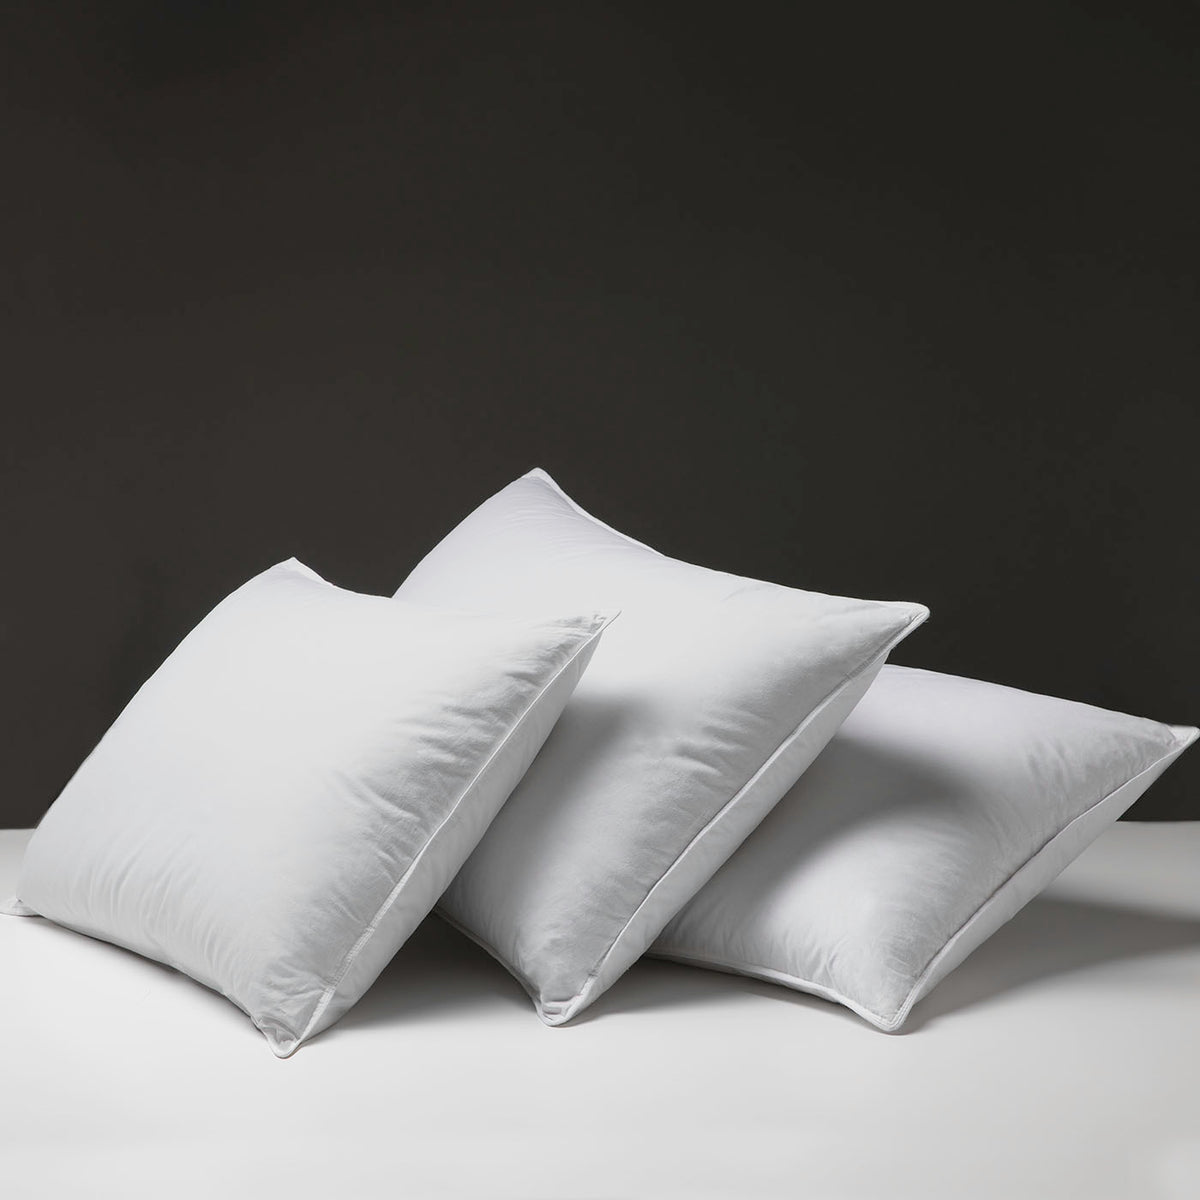 Ombelle Decorative Pillows - Charlotte's Grace